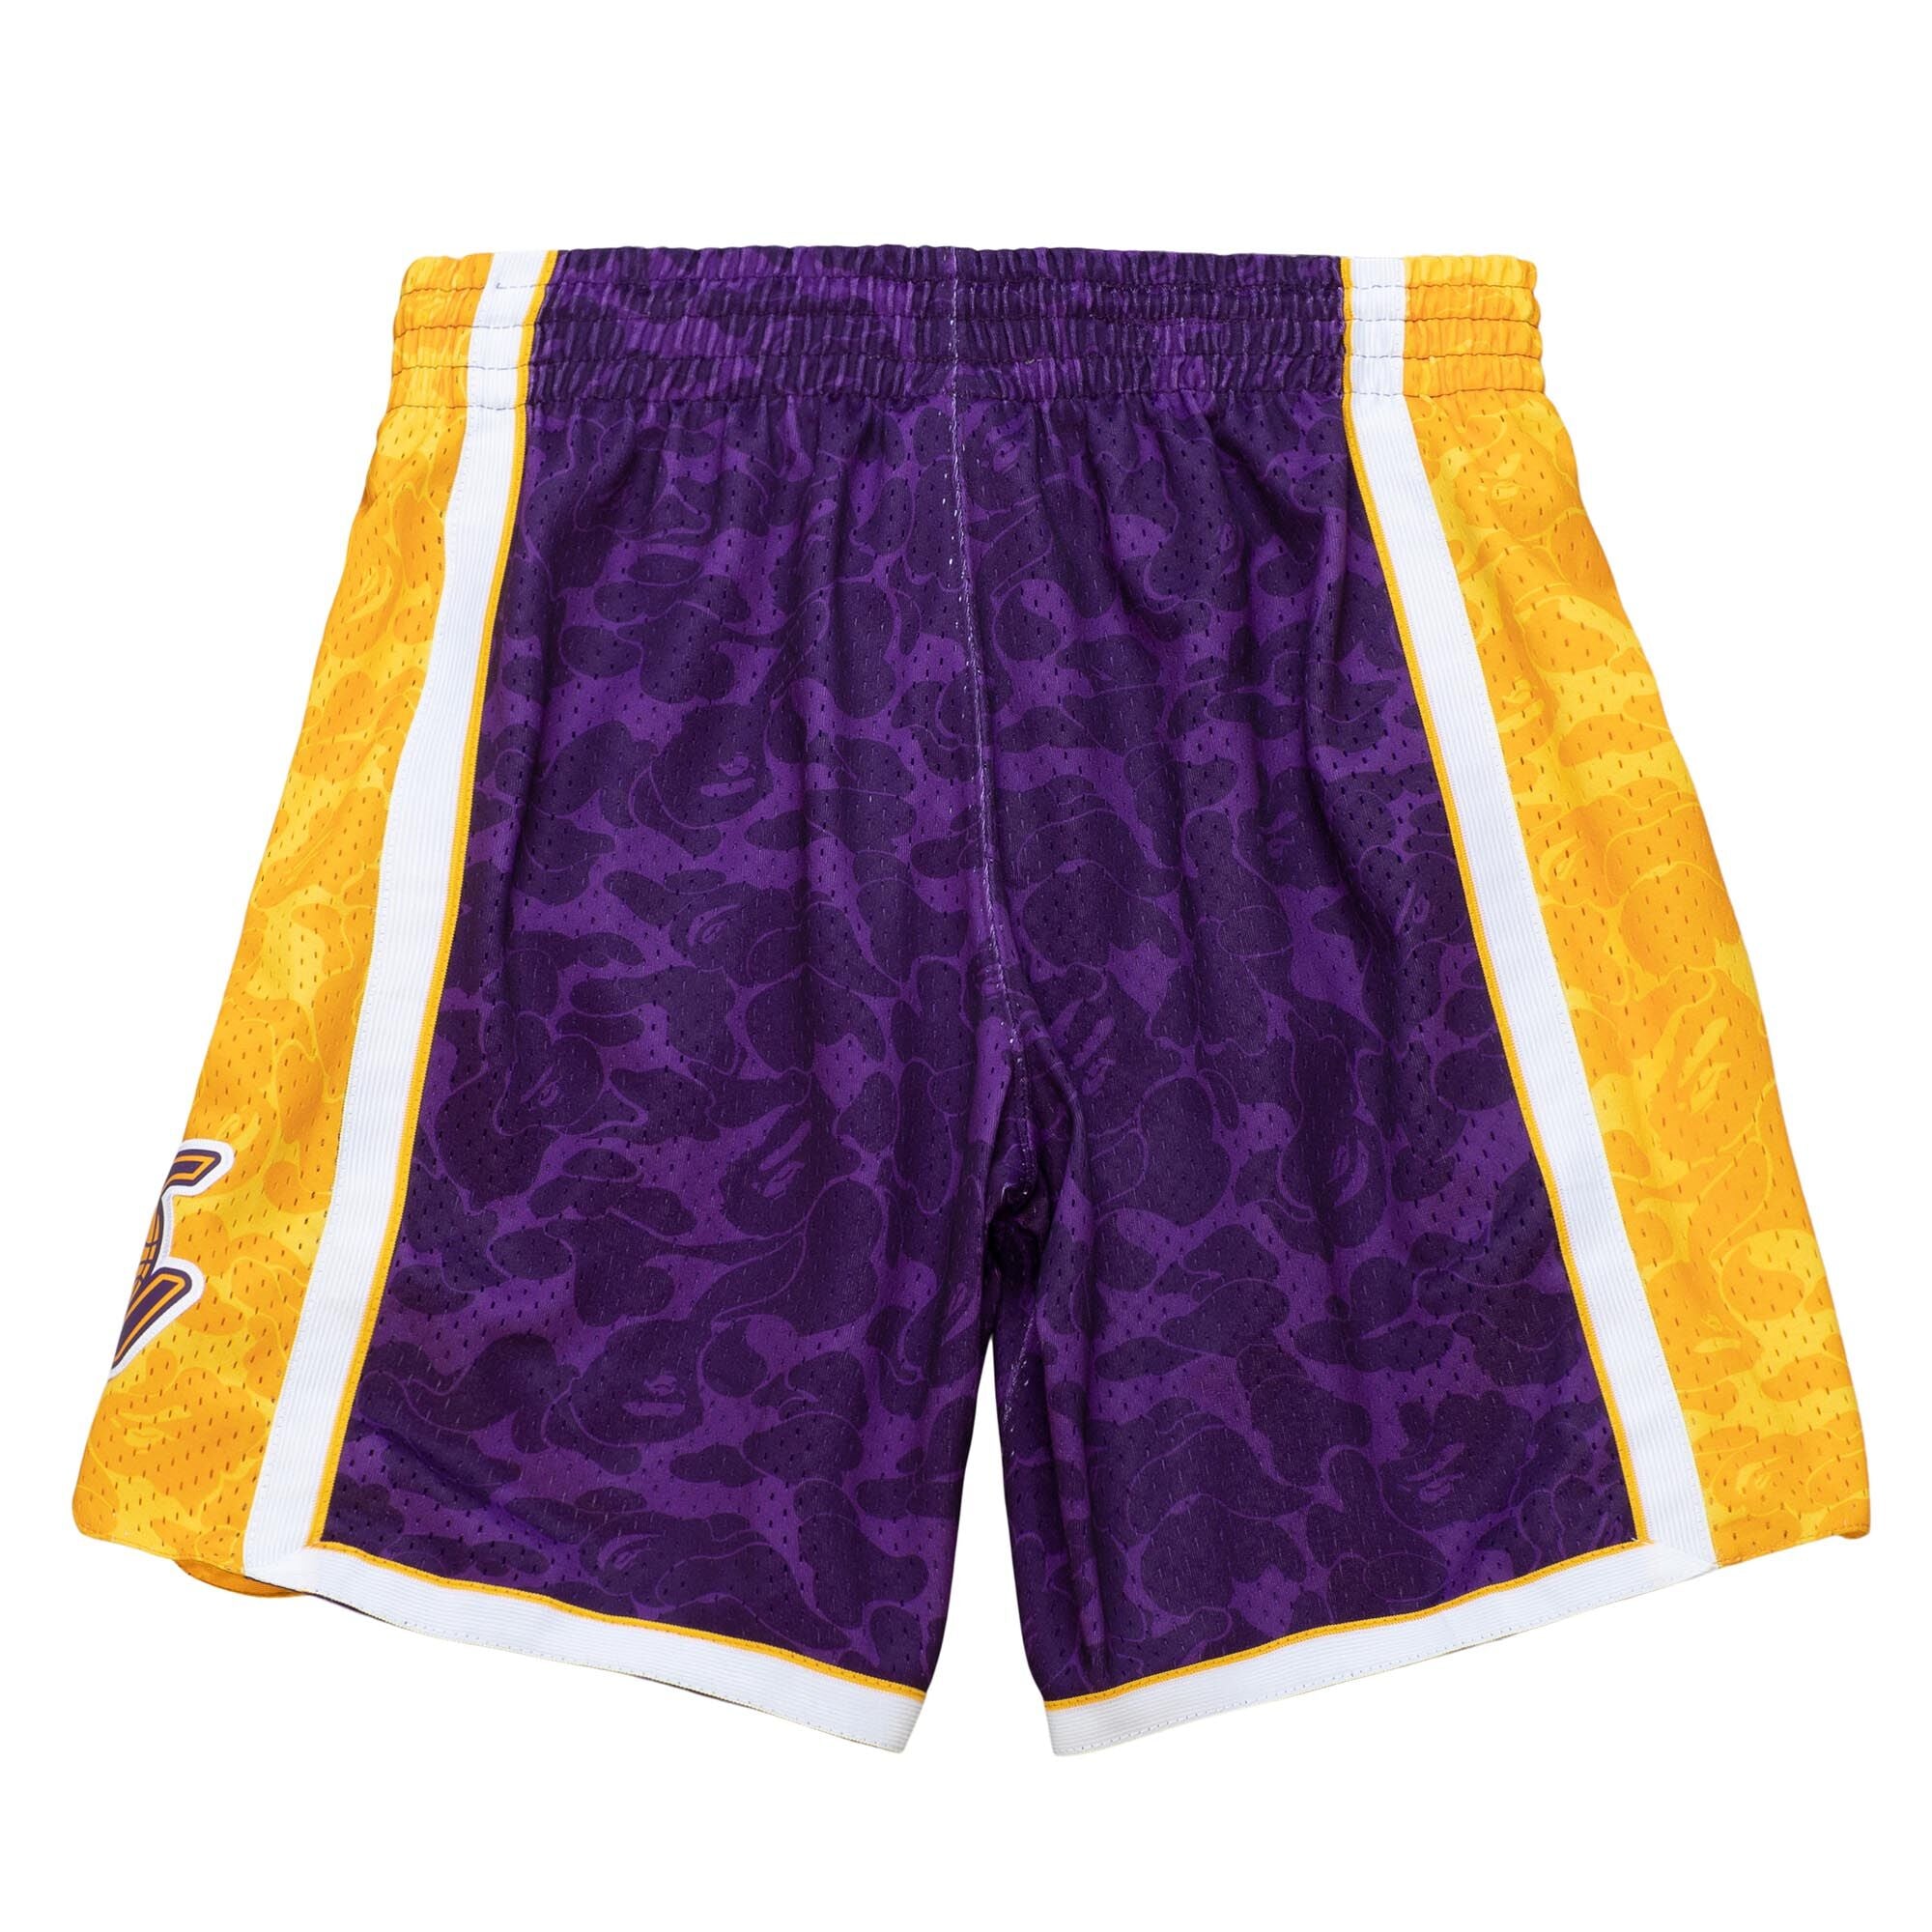 BAPE x Mitchell & Ness x Lakers – Lakers Store